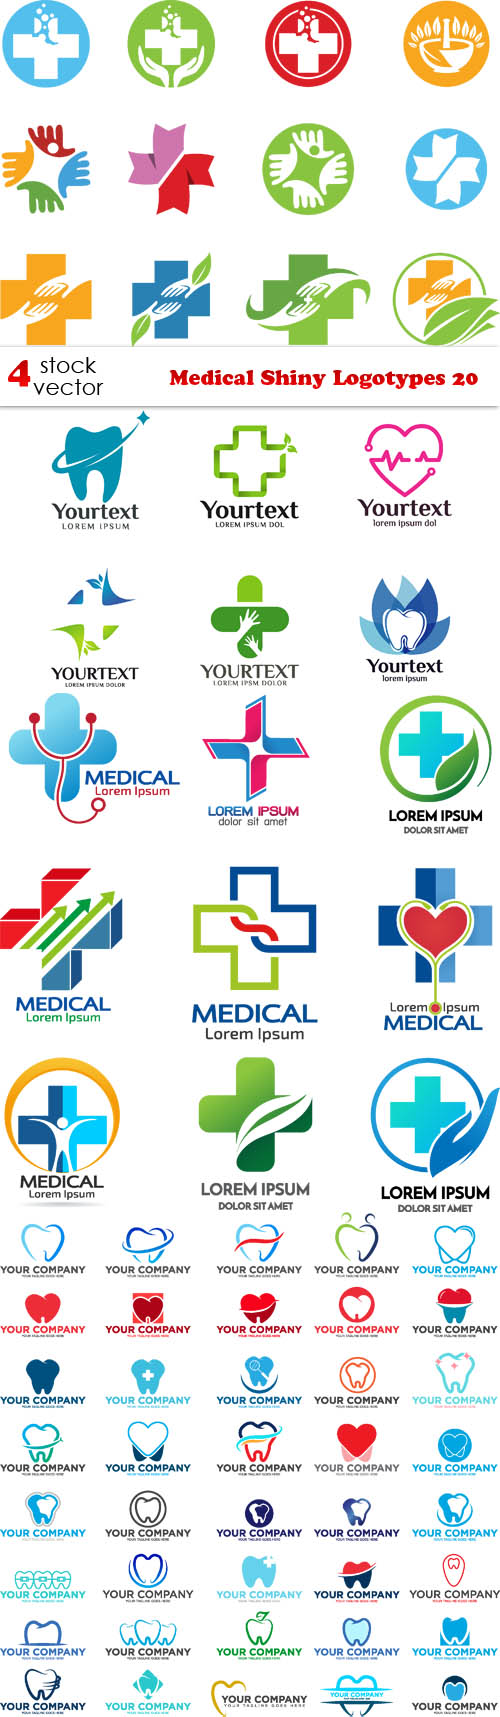 Vectors - Medical Shiny Logotypes 20